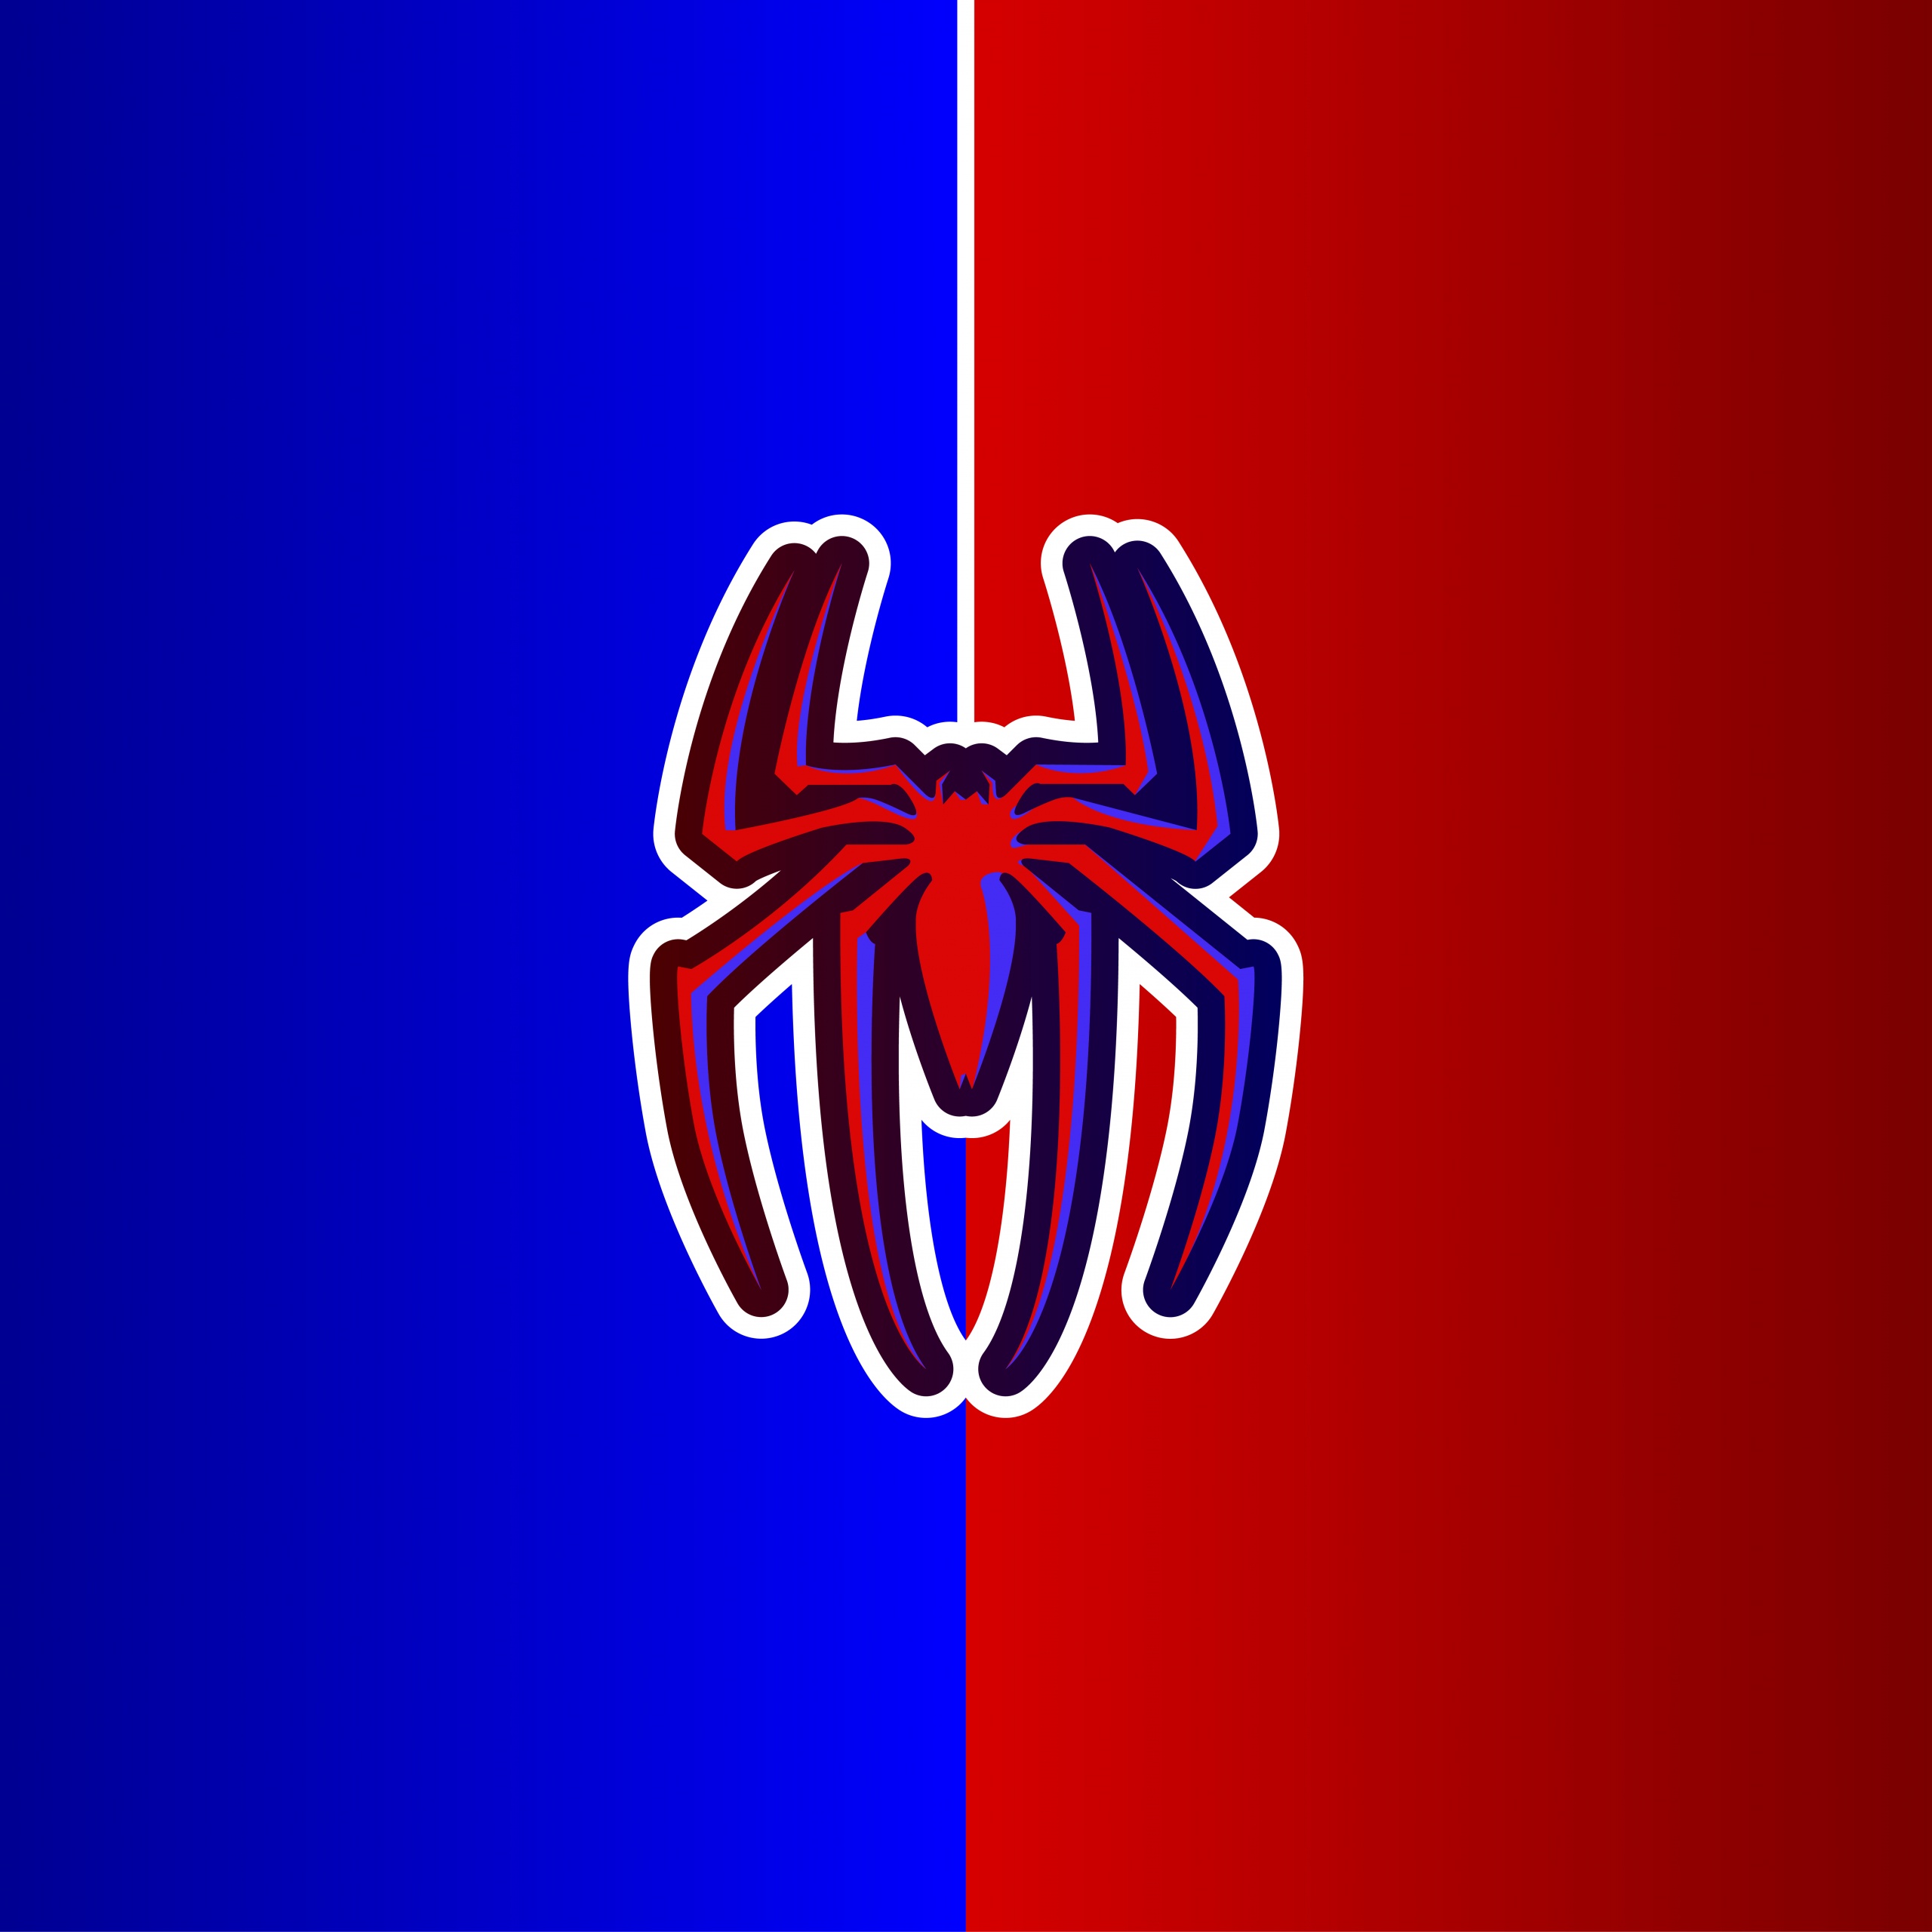 HD Spiderman Logo Wallpaper 71 images